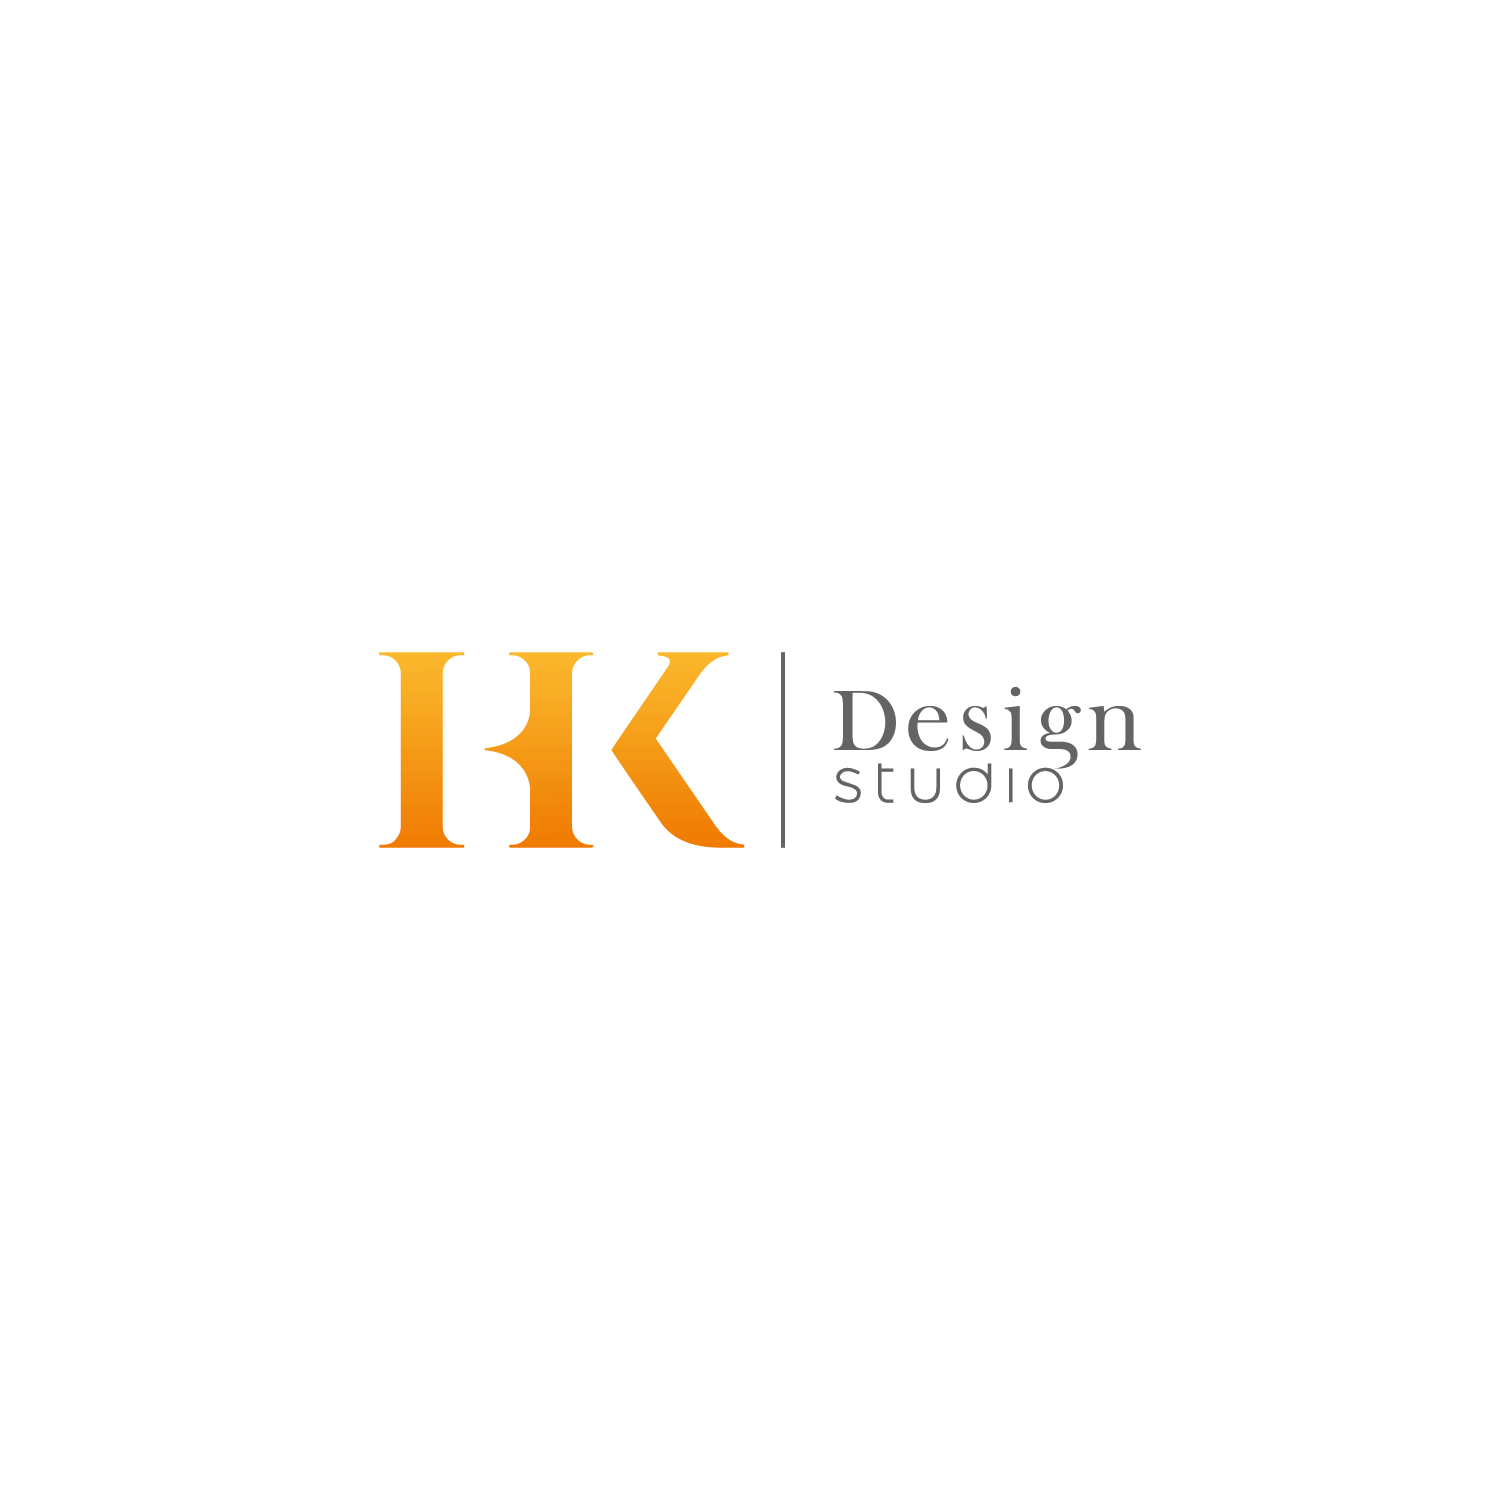 HK Logo - Modern, Professional, Design Agency Logo Design for HK Design Studio